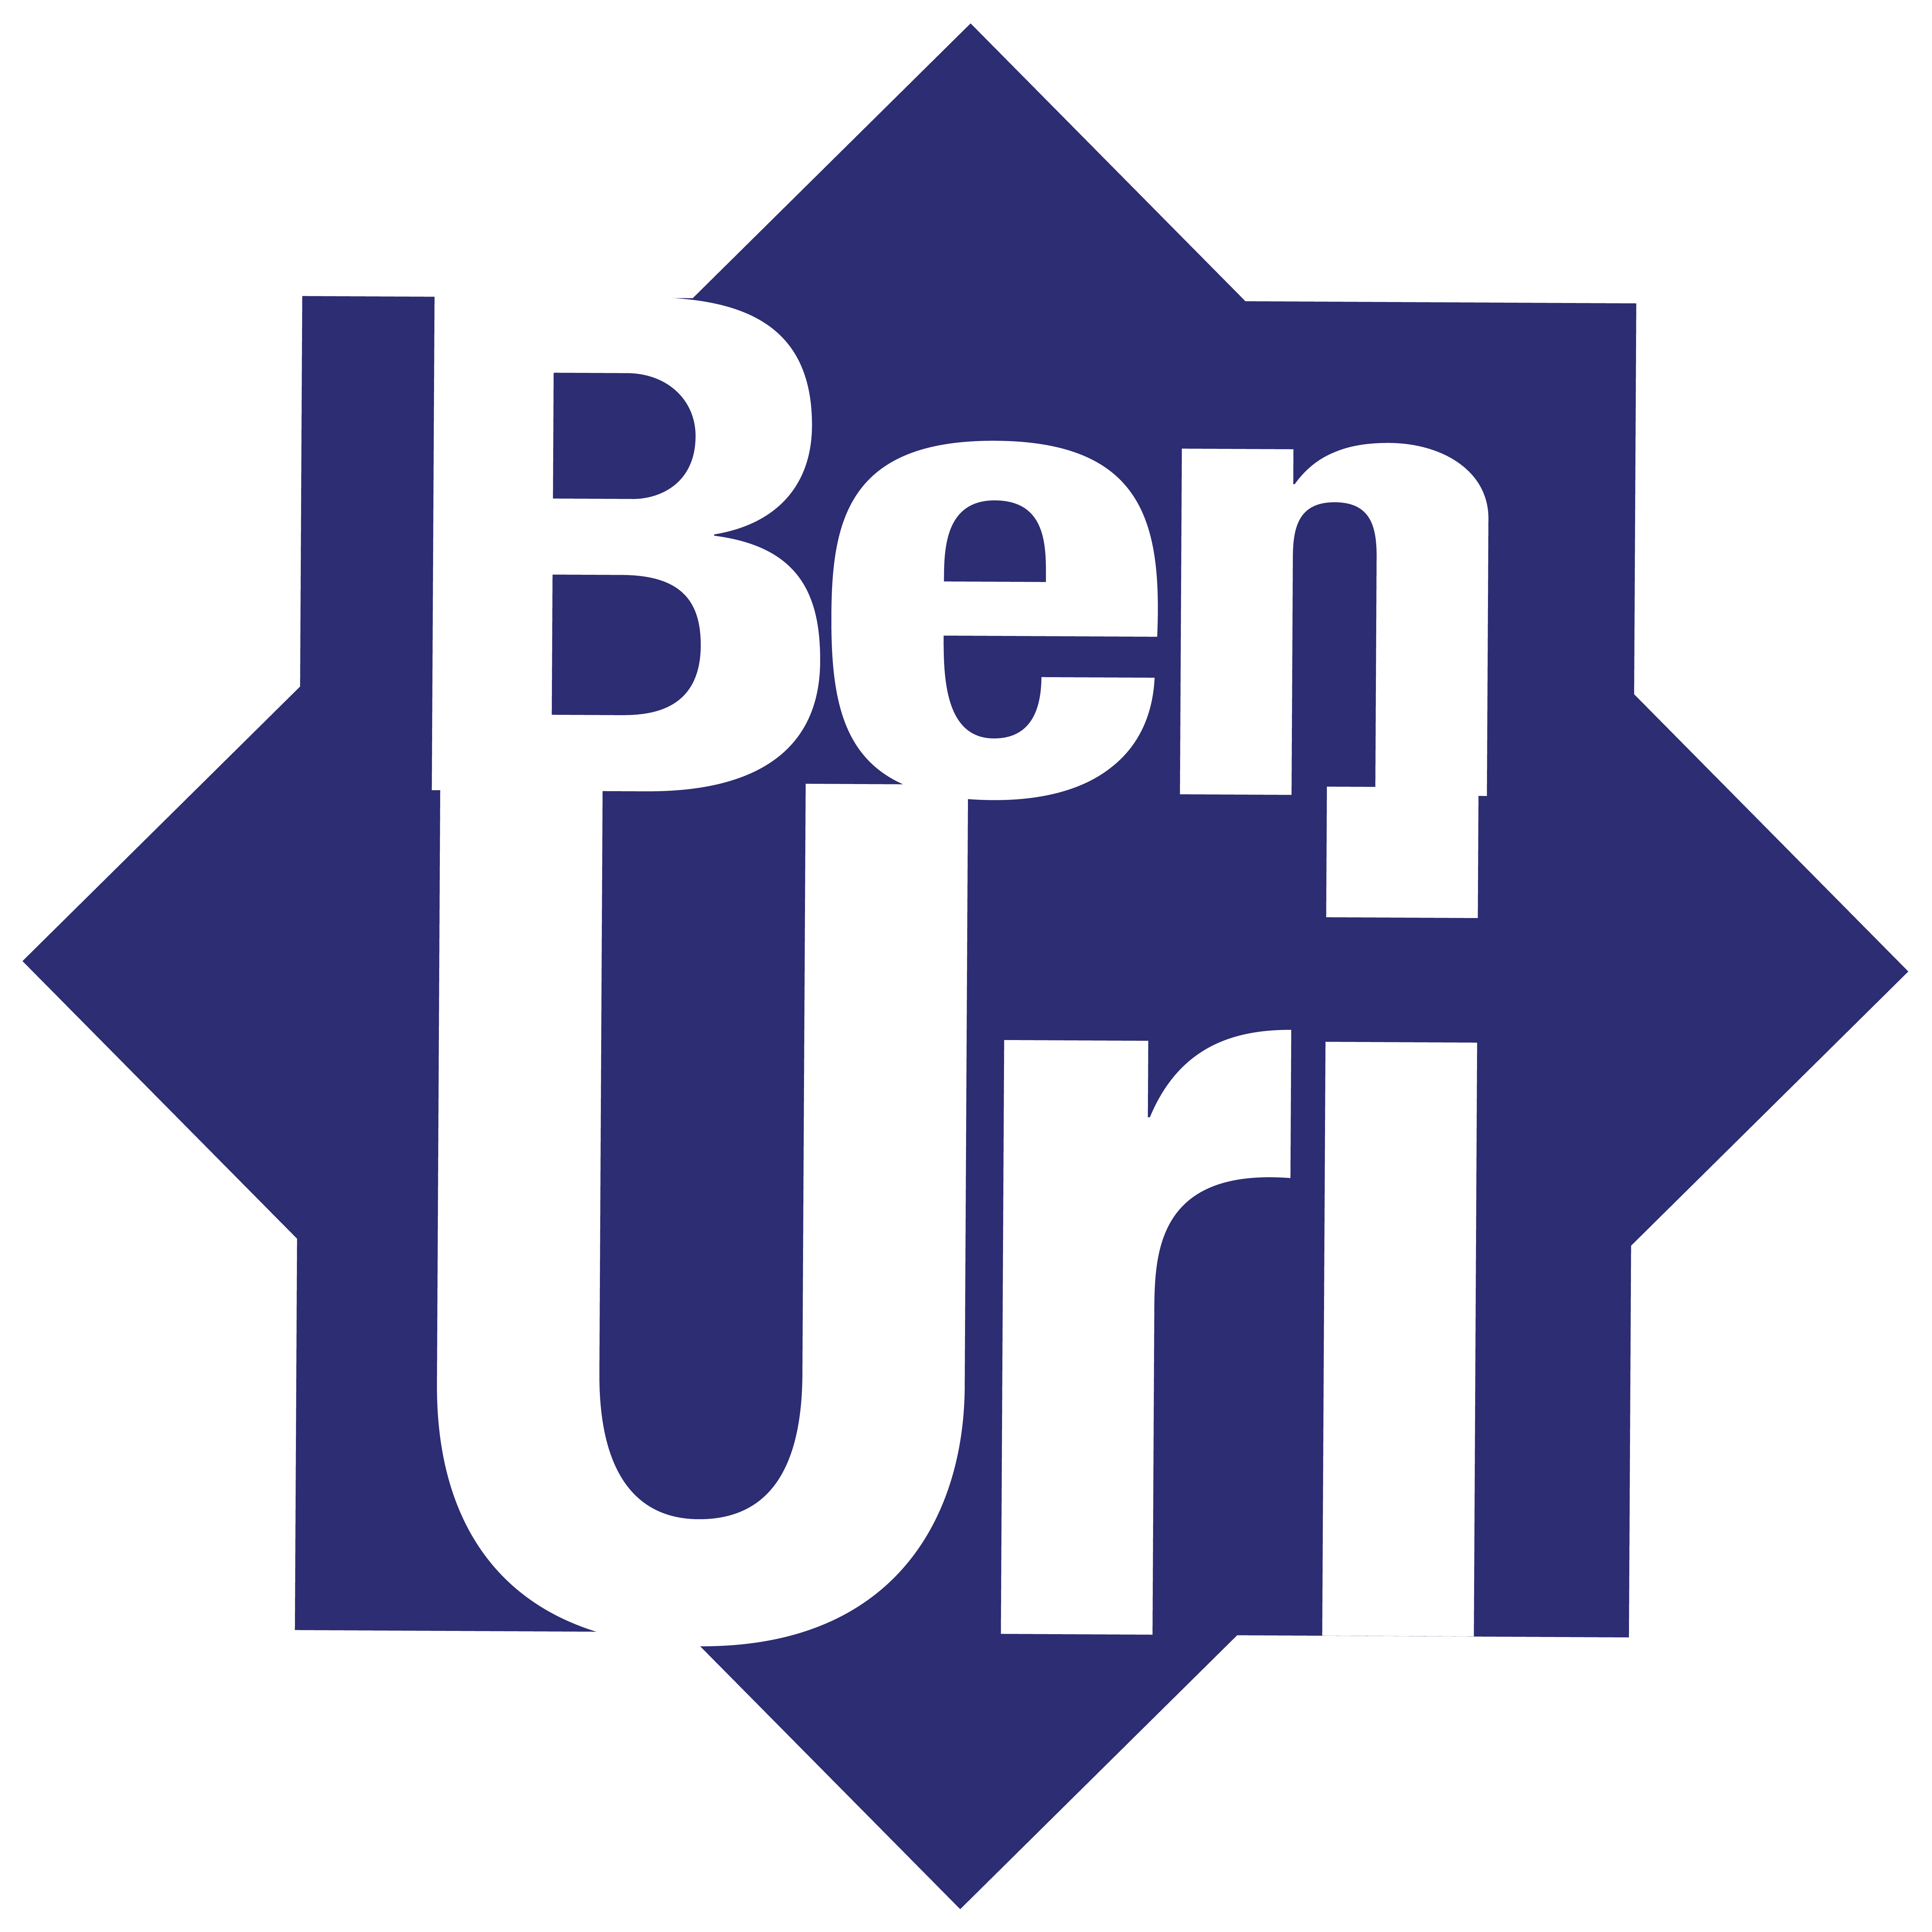 Ben Uri Gallery and Museum company logo